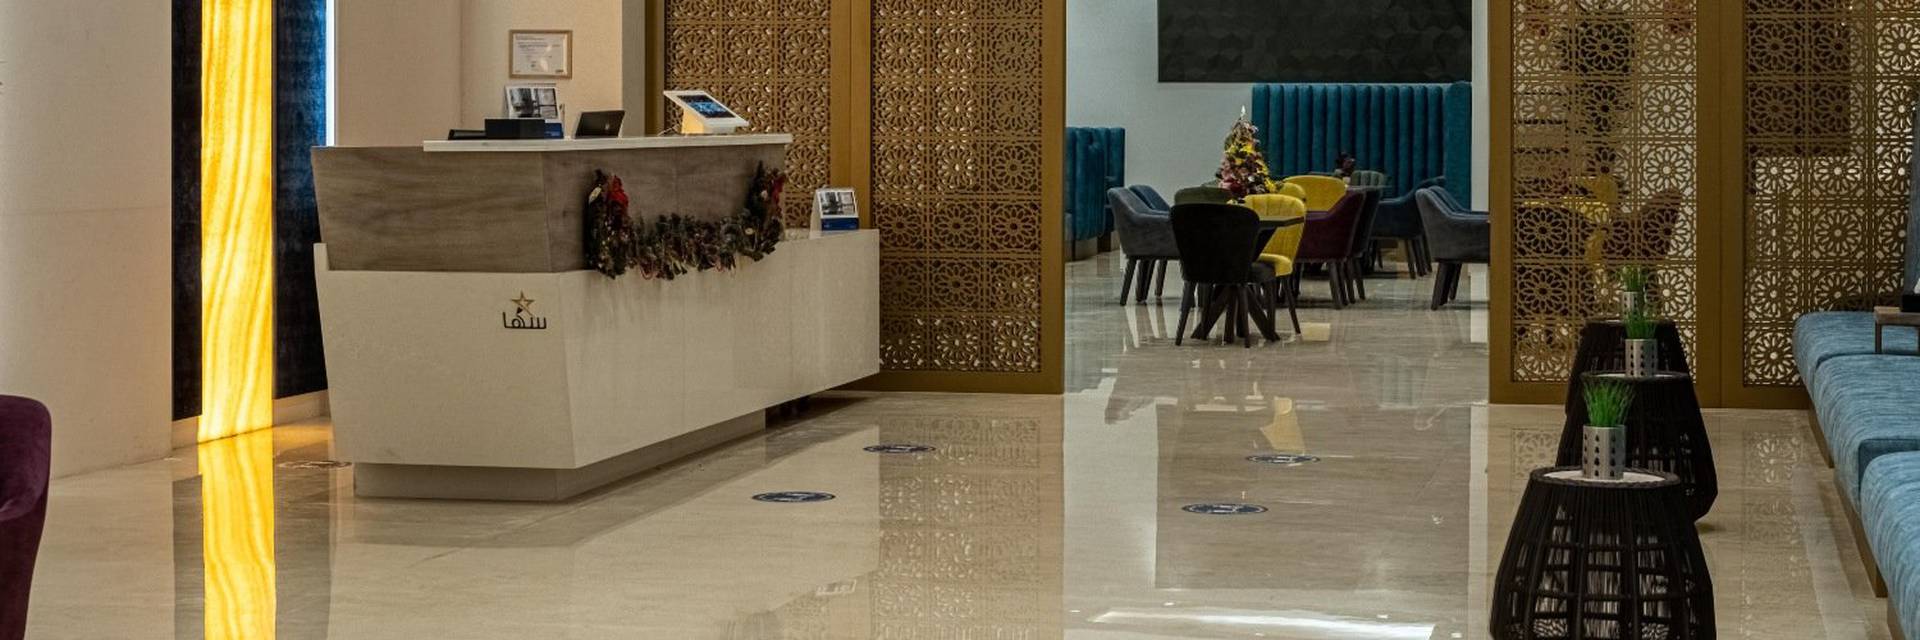 Add a review SUHA Mina Rashid Hotel Apartments, Bur Dubai